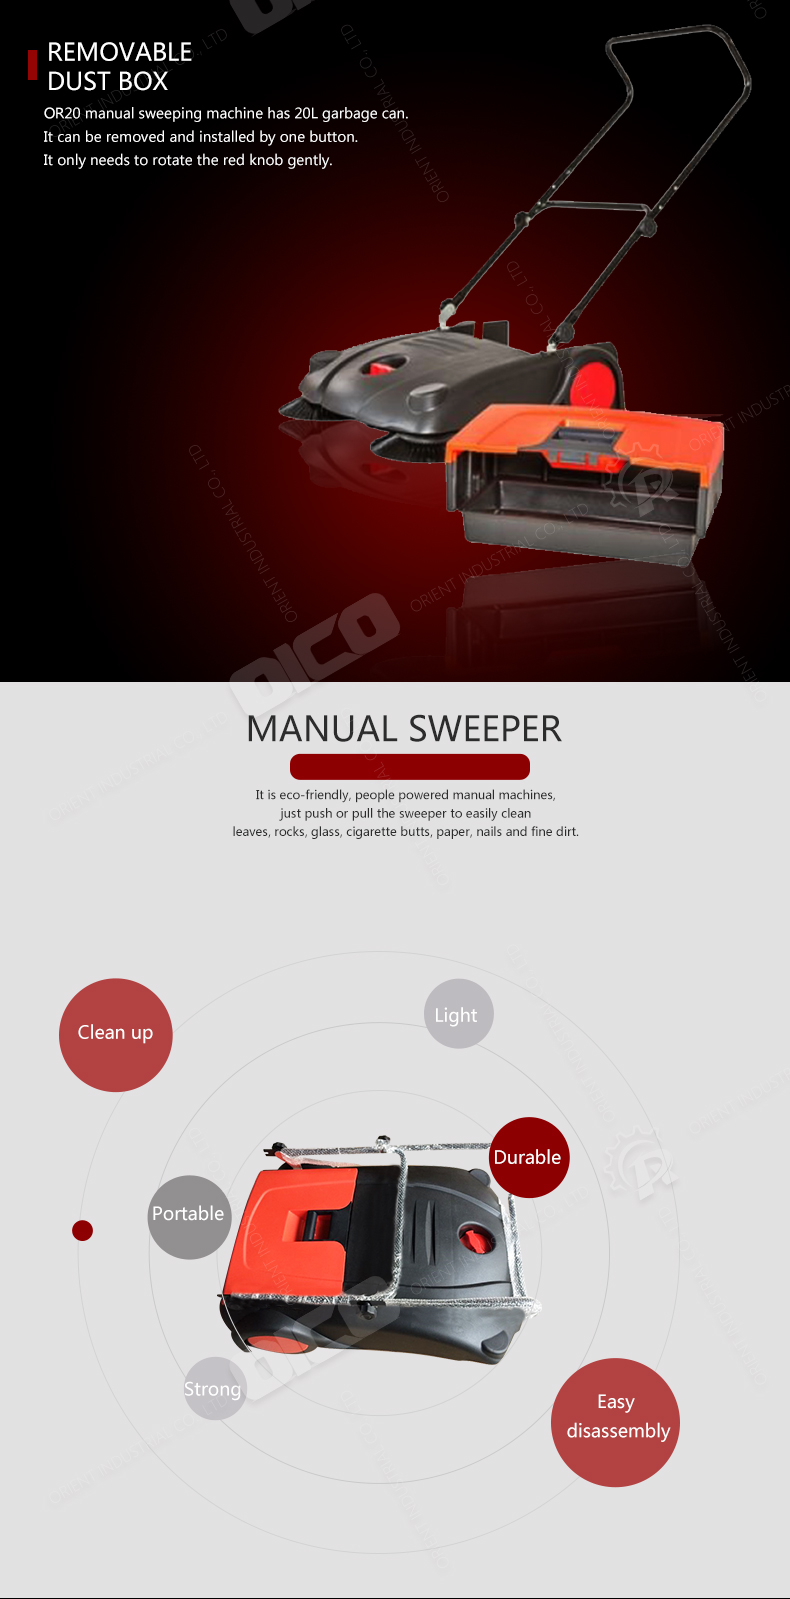 Manual Sweeper